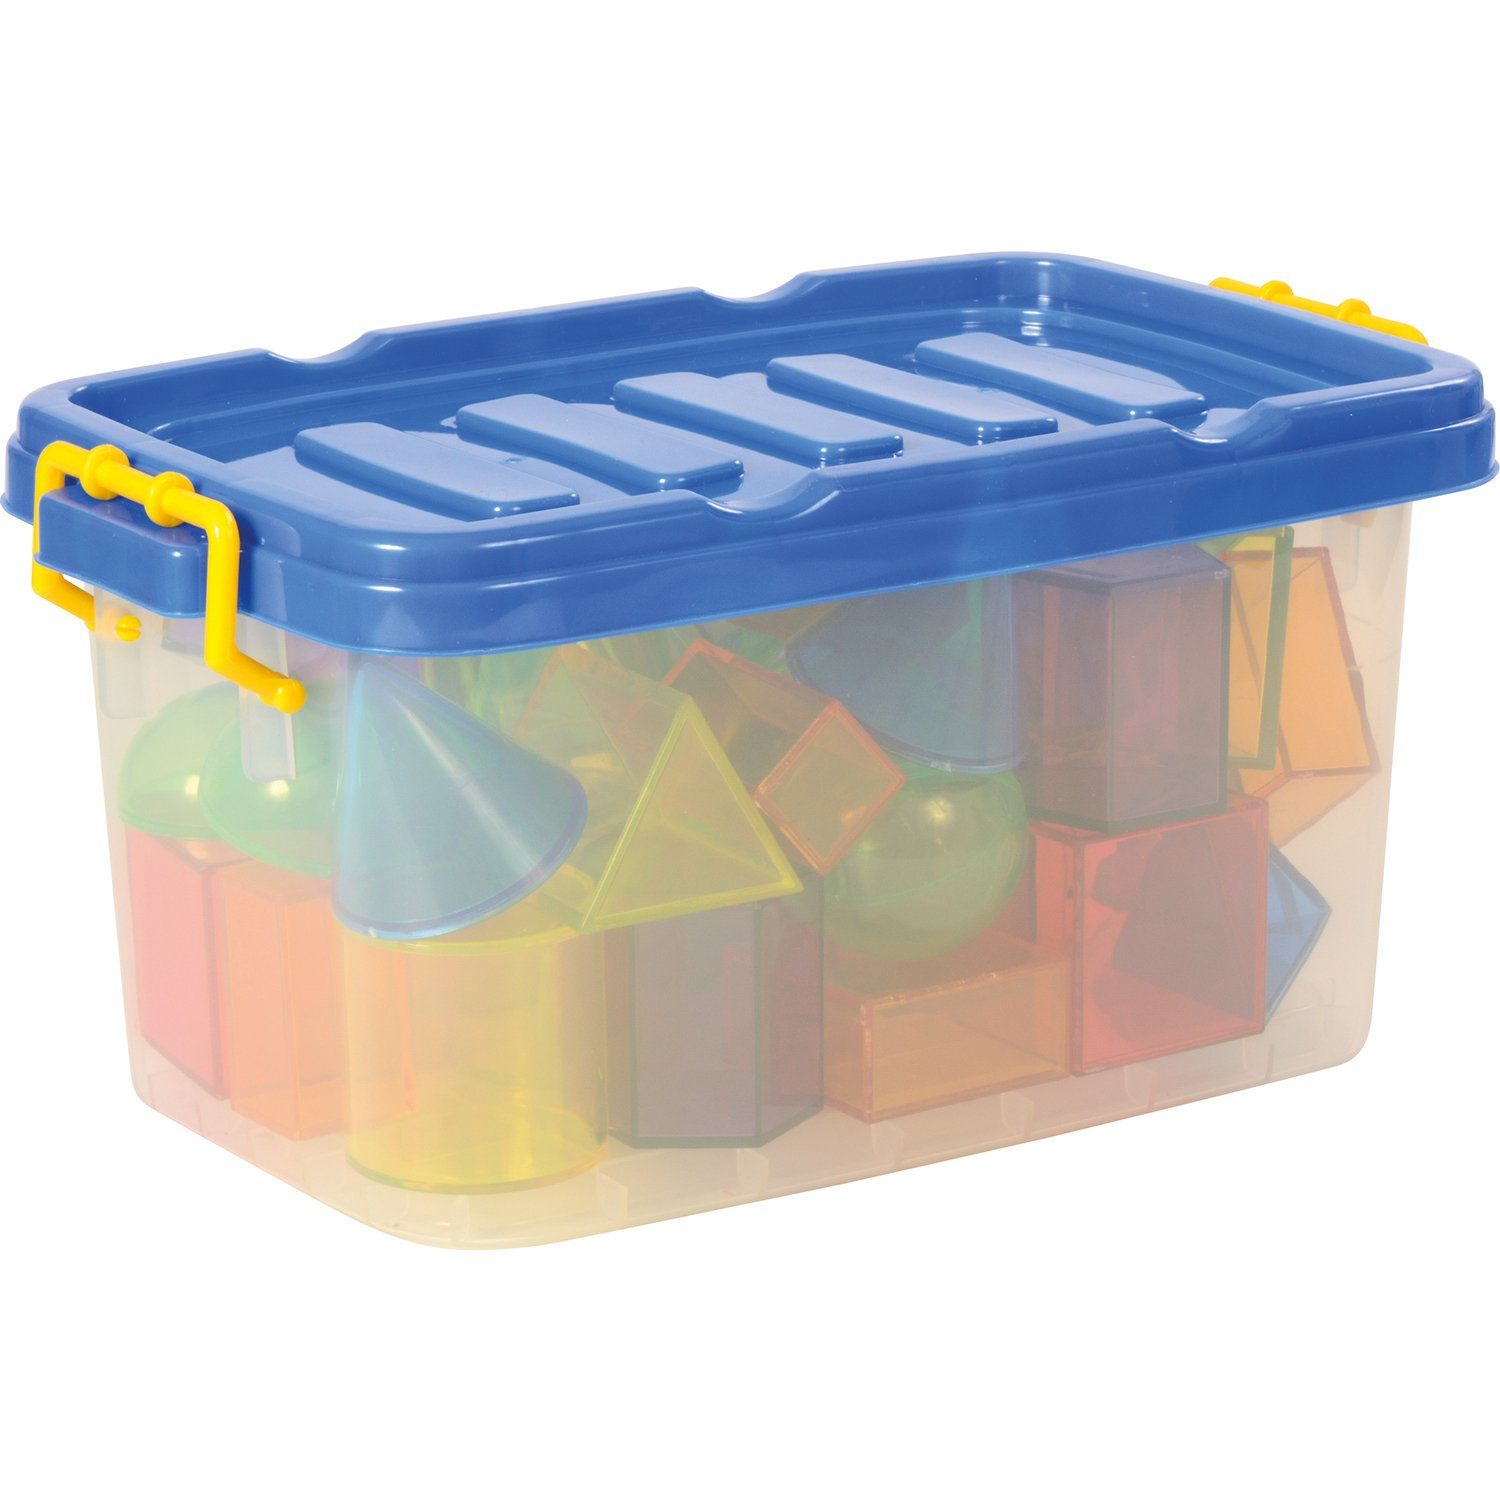 EDUPLAY Lernspielzeug Geoformen, Kunststoff, inklusive Box